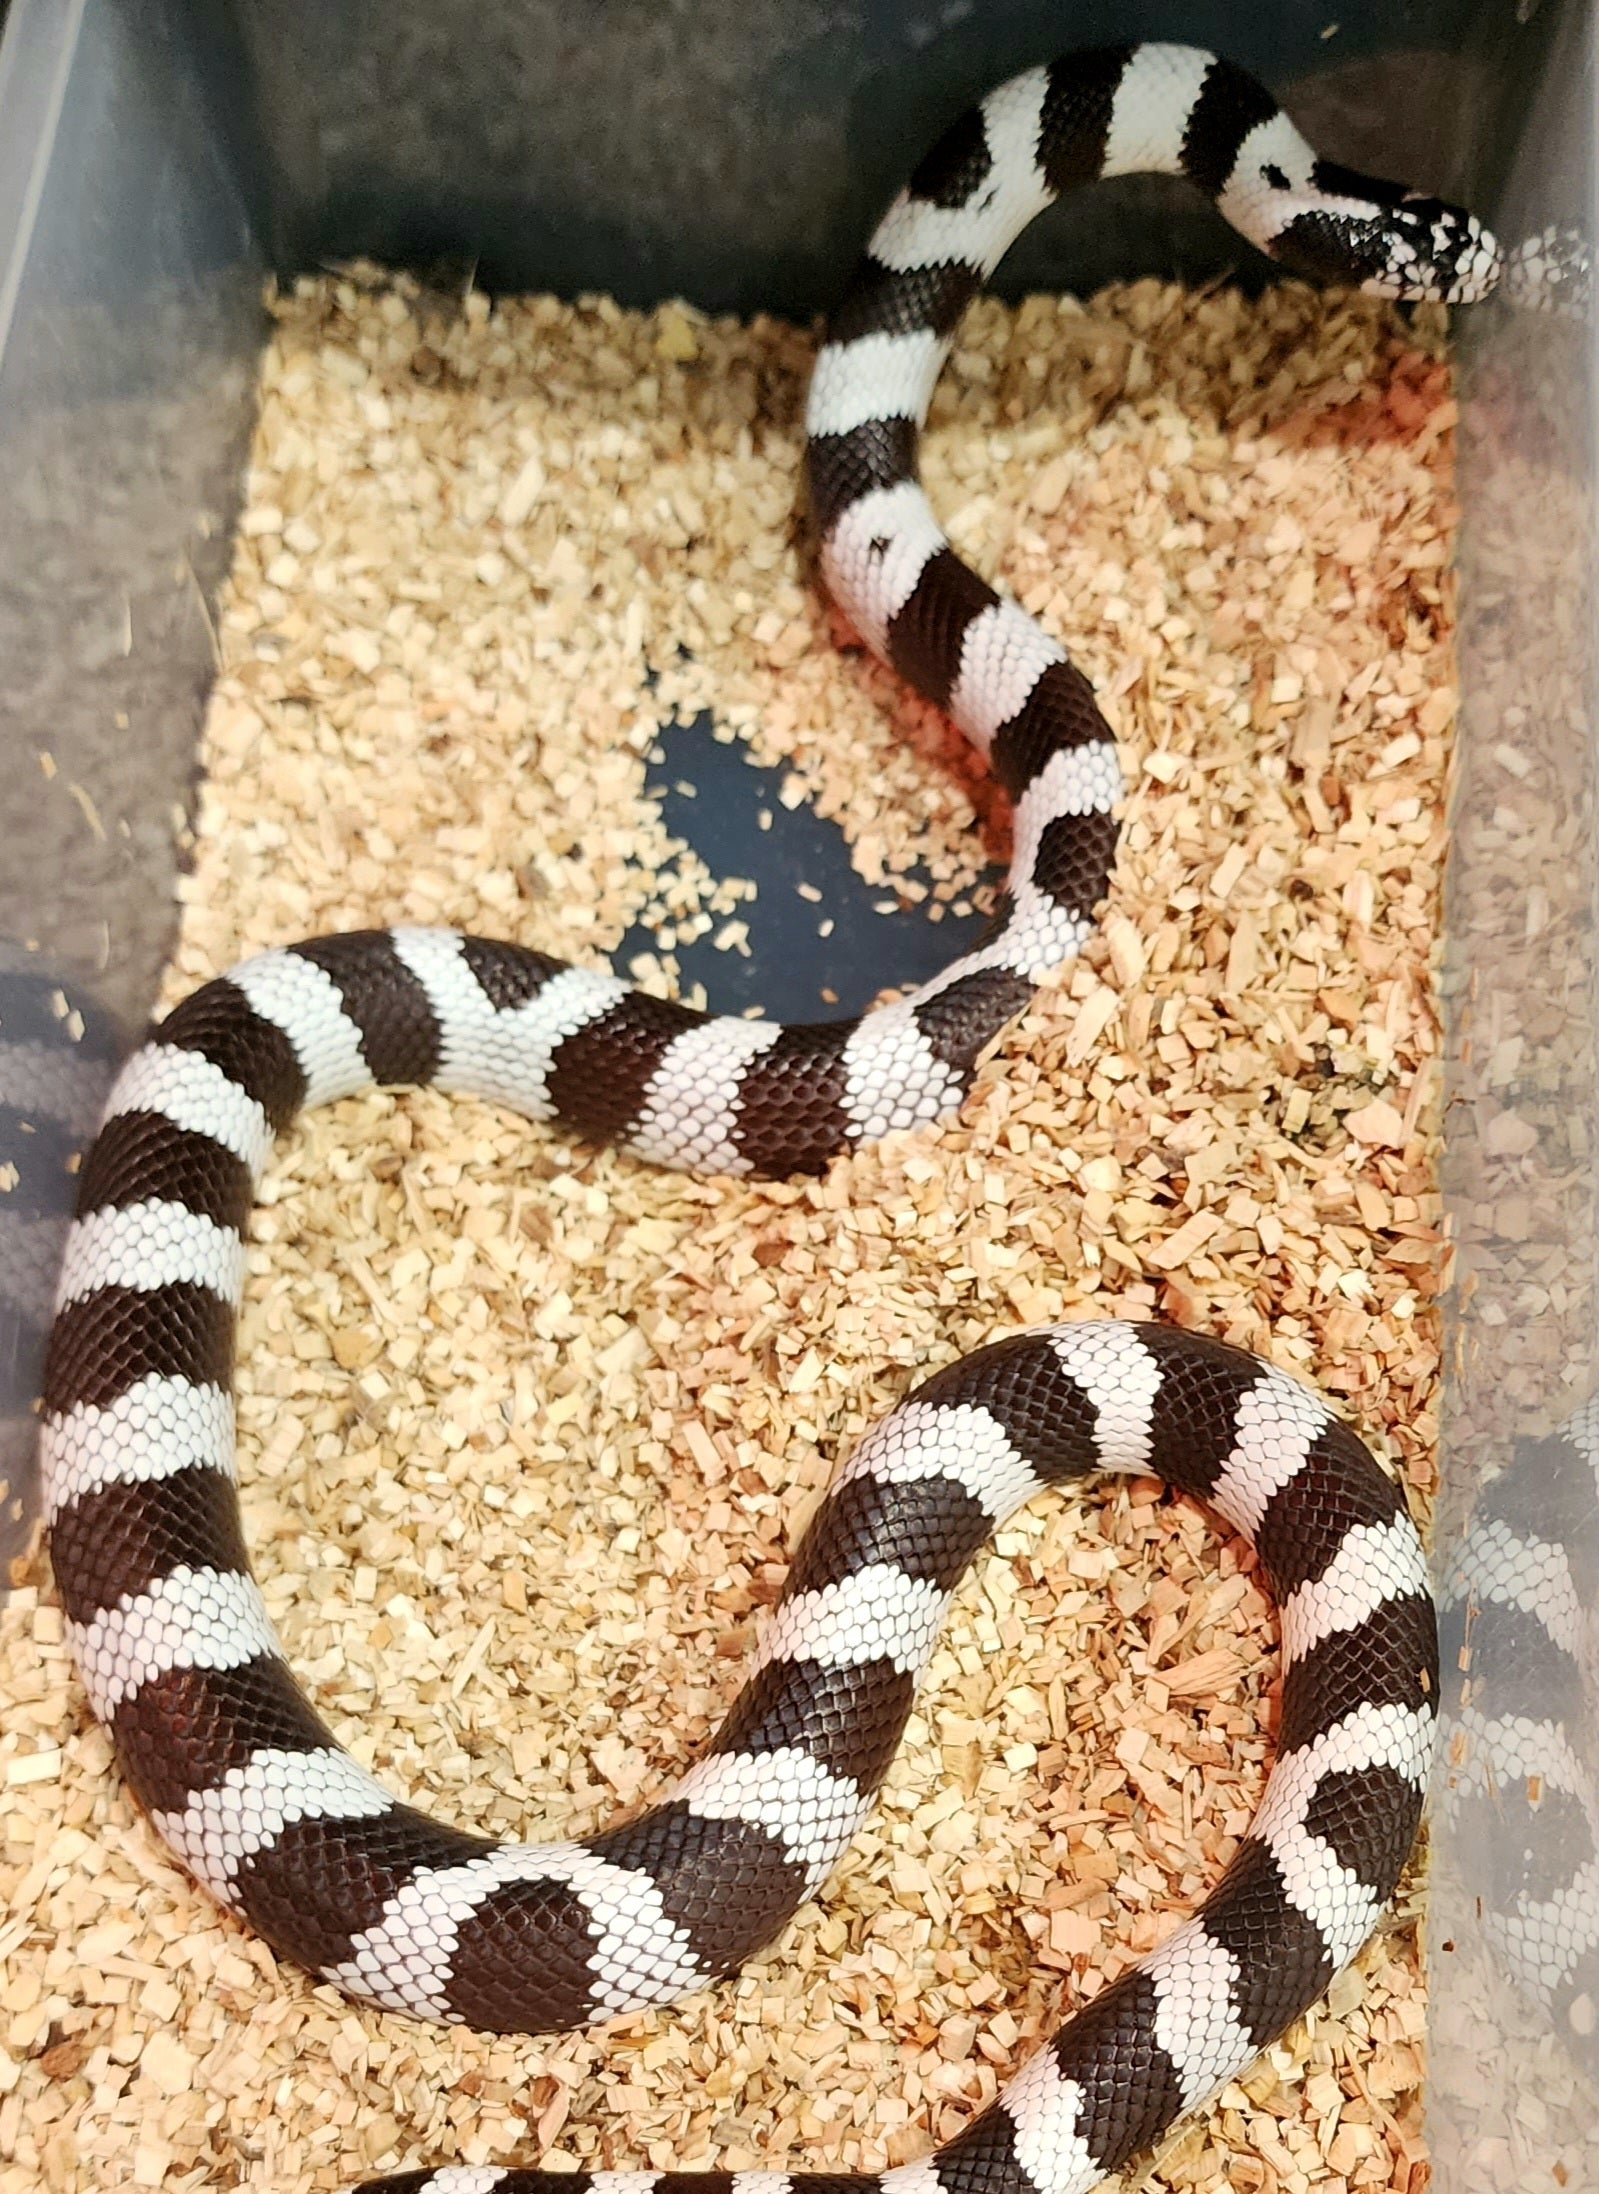 black and white baby king snake